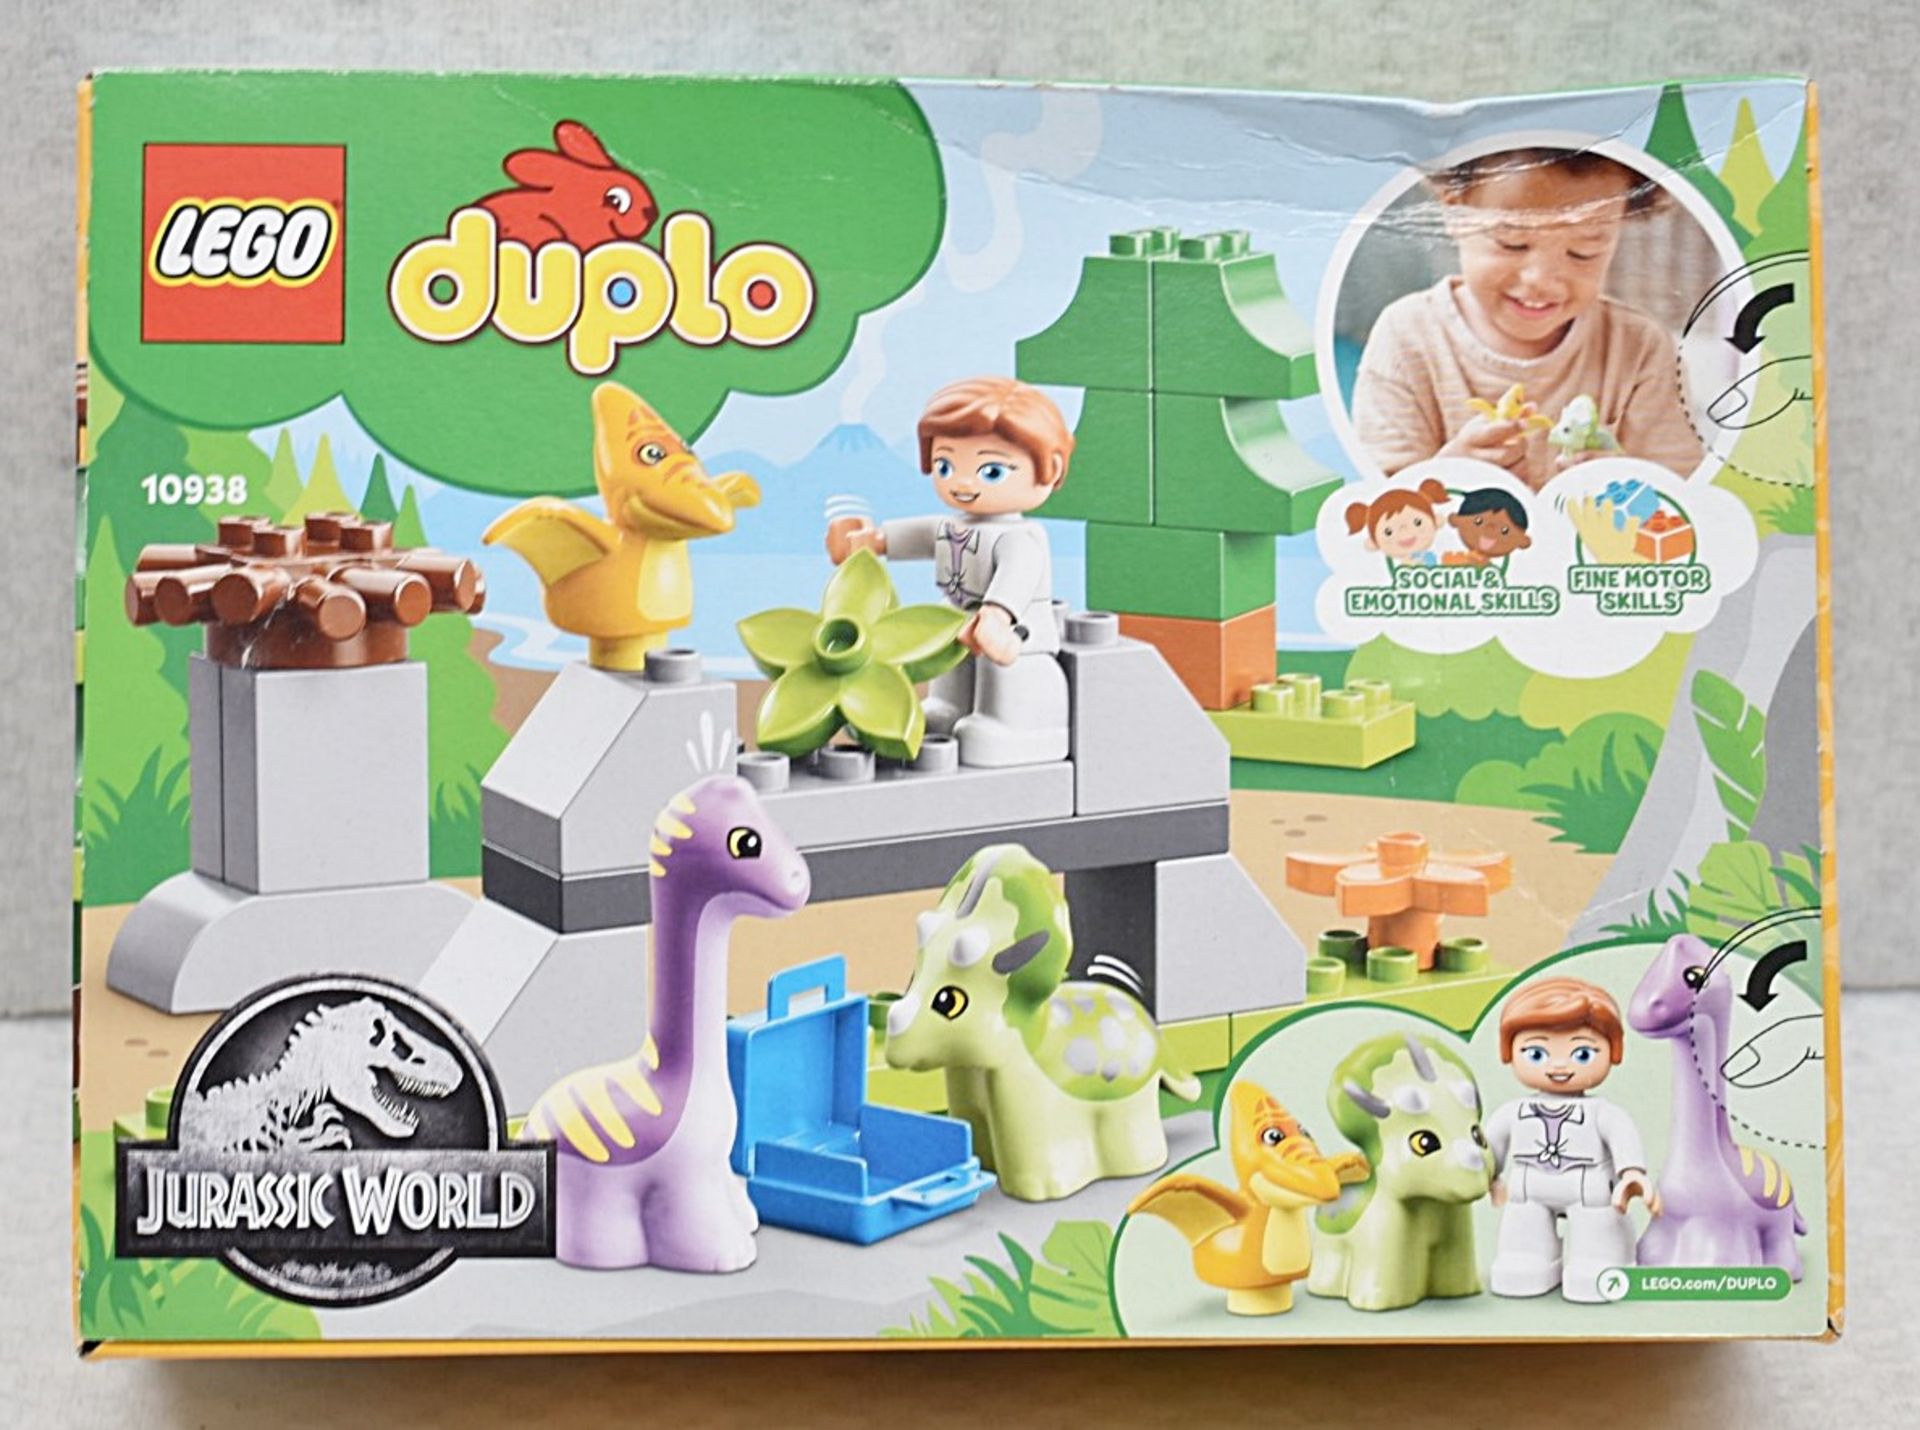 1 x LEGO DUPLO Jurassic World Dinosaur Nursery Set (10938 ) - Unused Boxed Stock